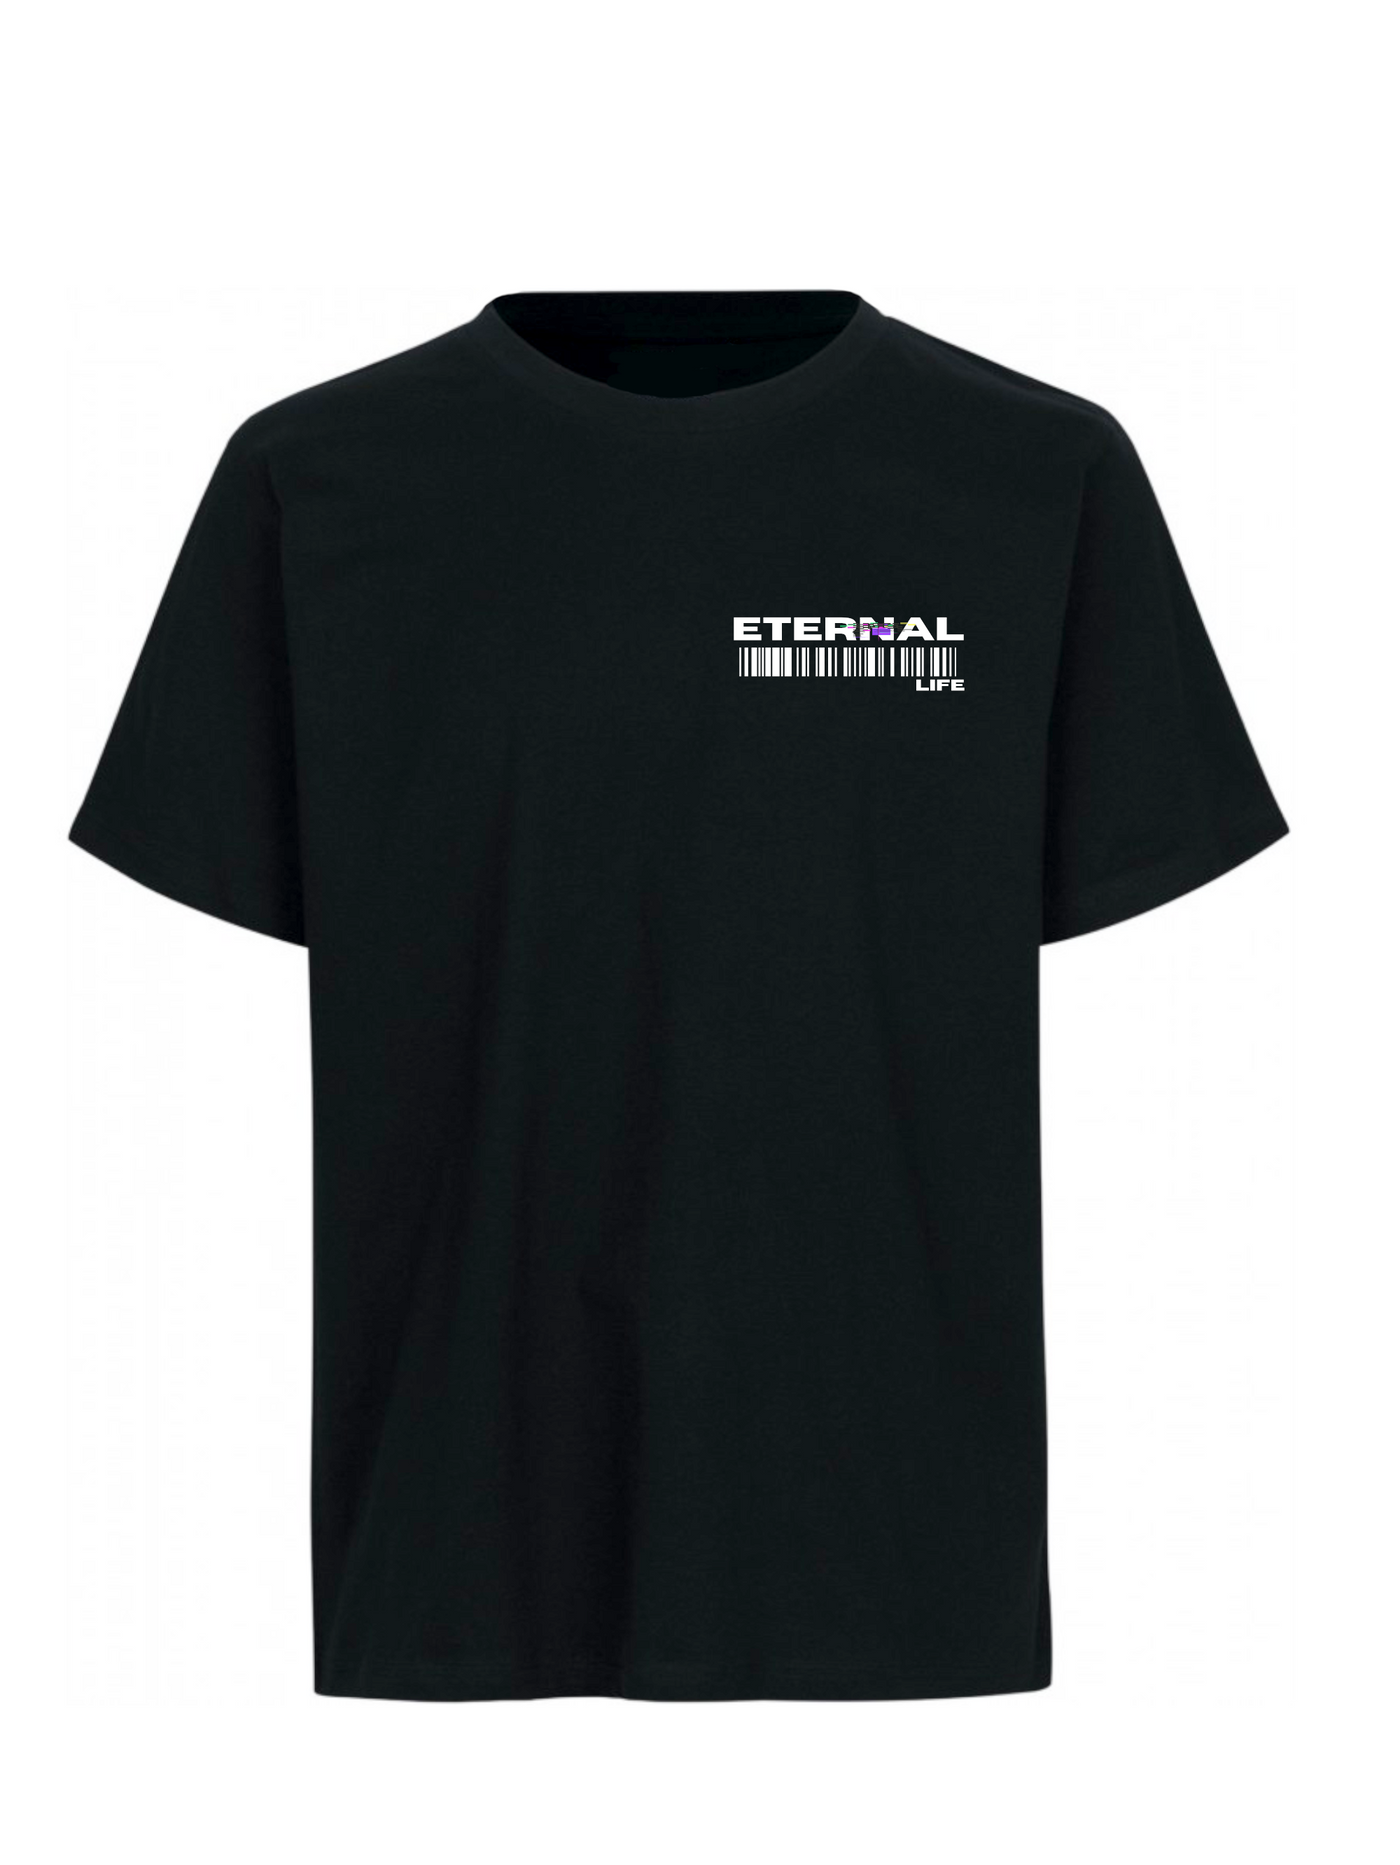 Eternal Life Shirt Oversize Black